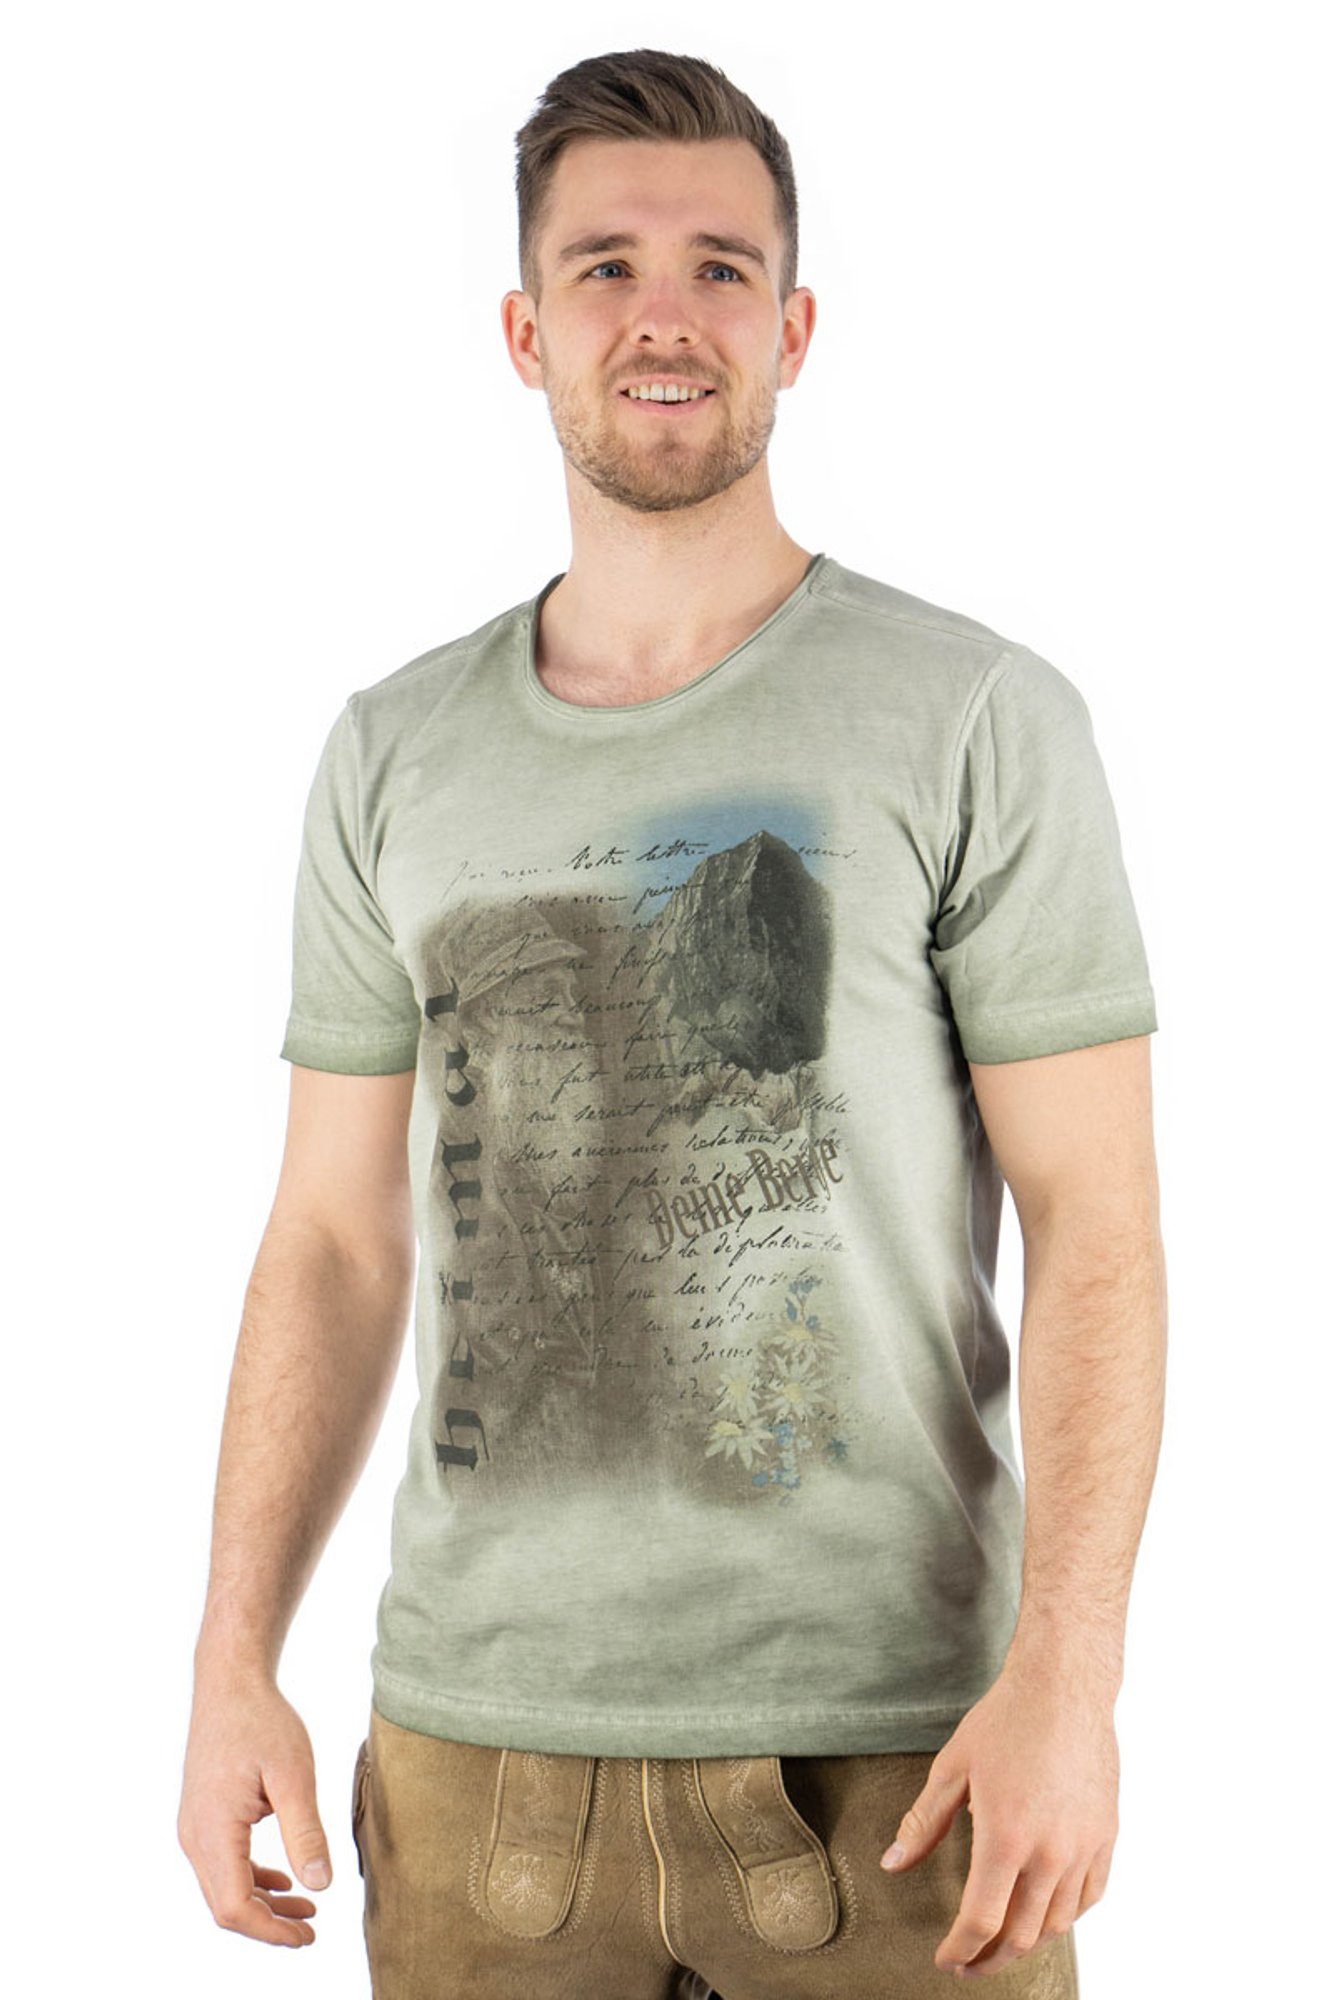 Kurzarm khaki/schlamm OS-Trachten Trachtenshirt mit Praiol T-Shirt Motivdruck